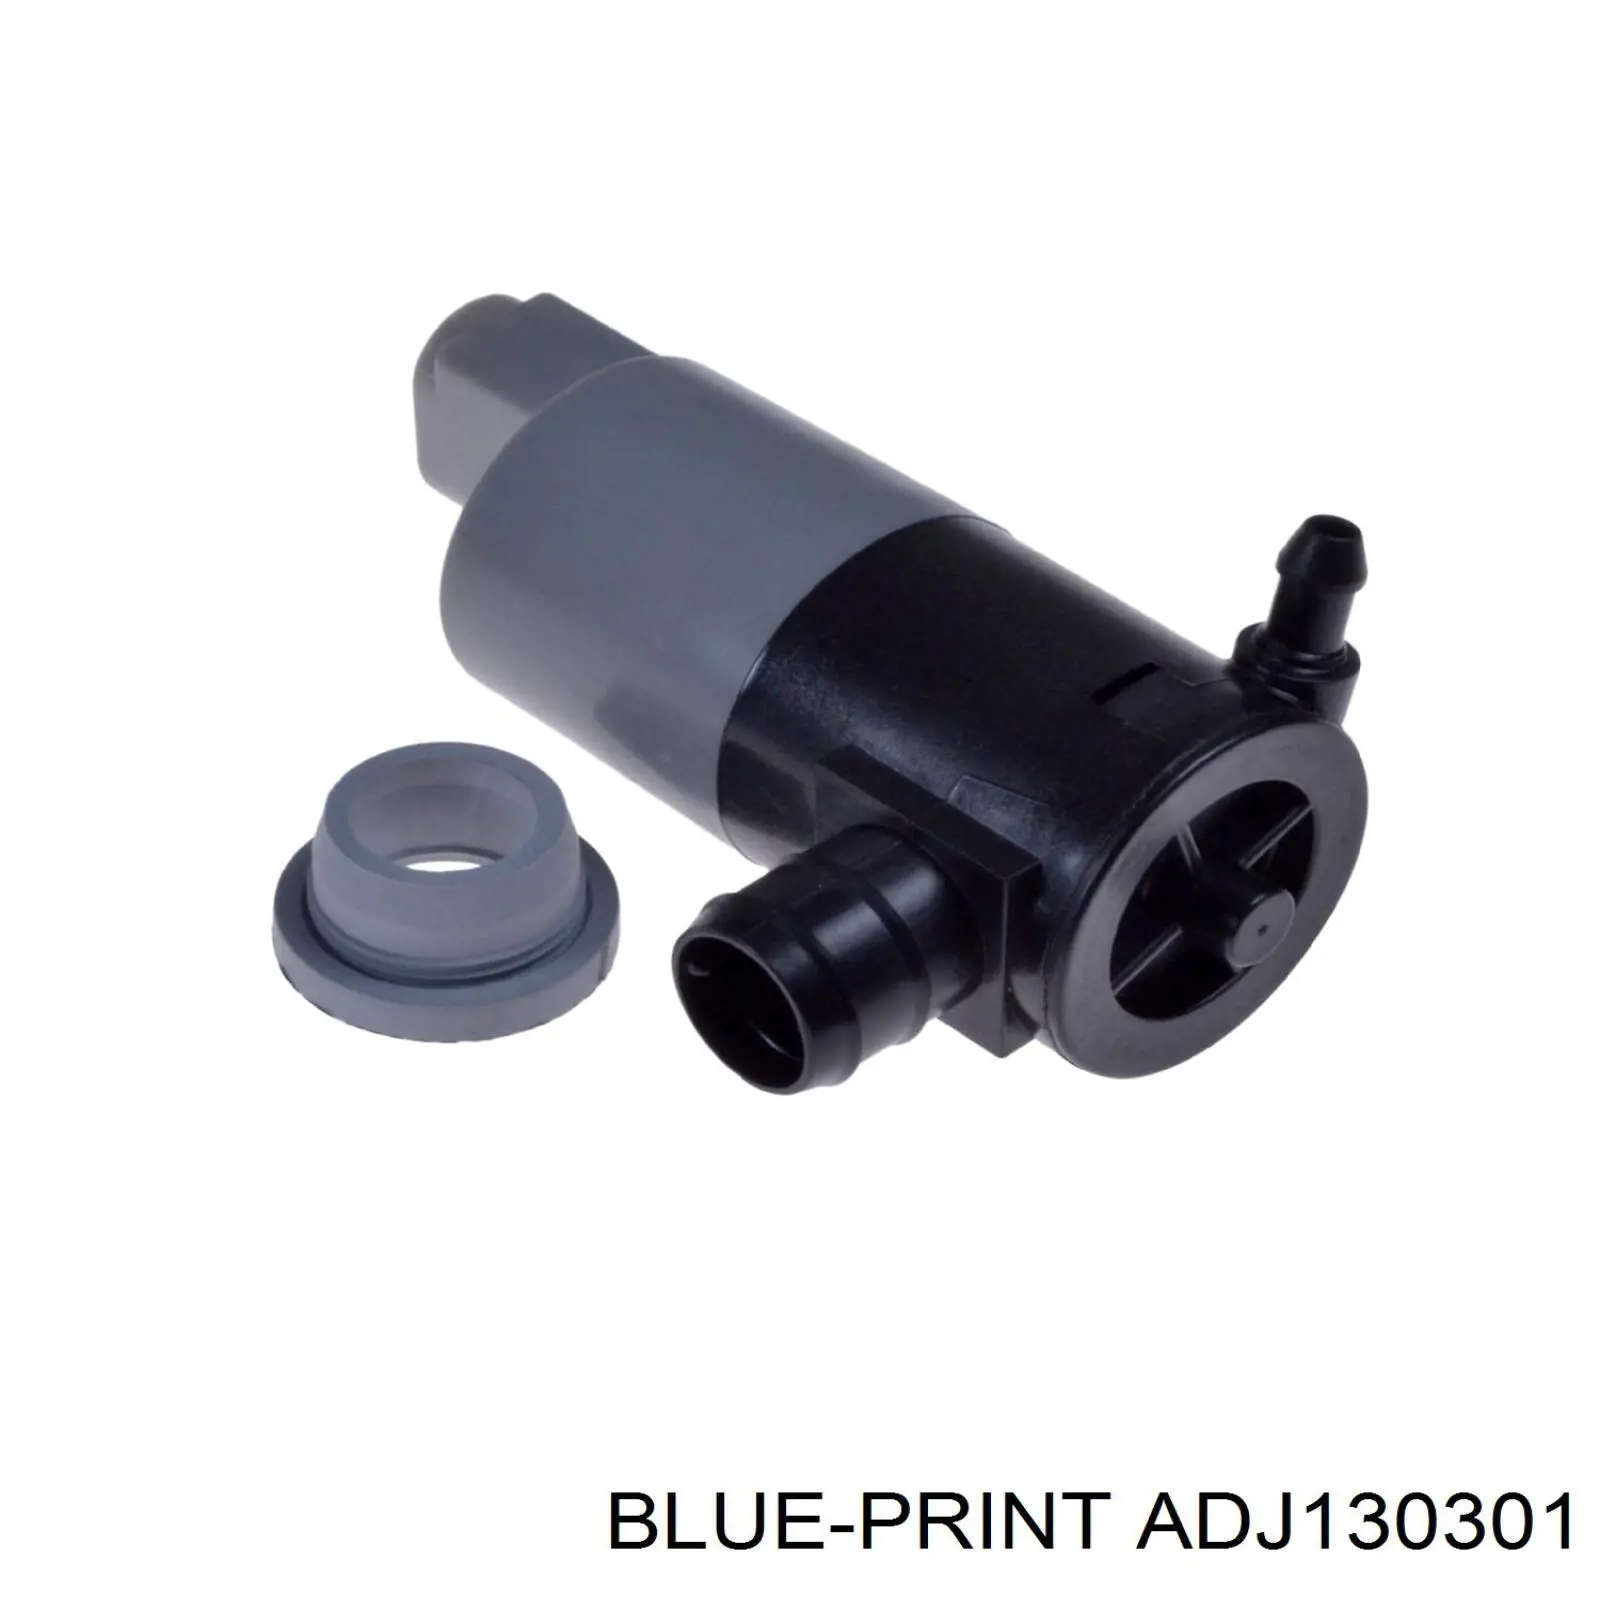 ADJ130301 Blue Print bomba de agua limpiaparabrisas, delantera